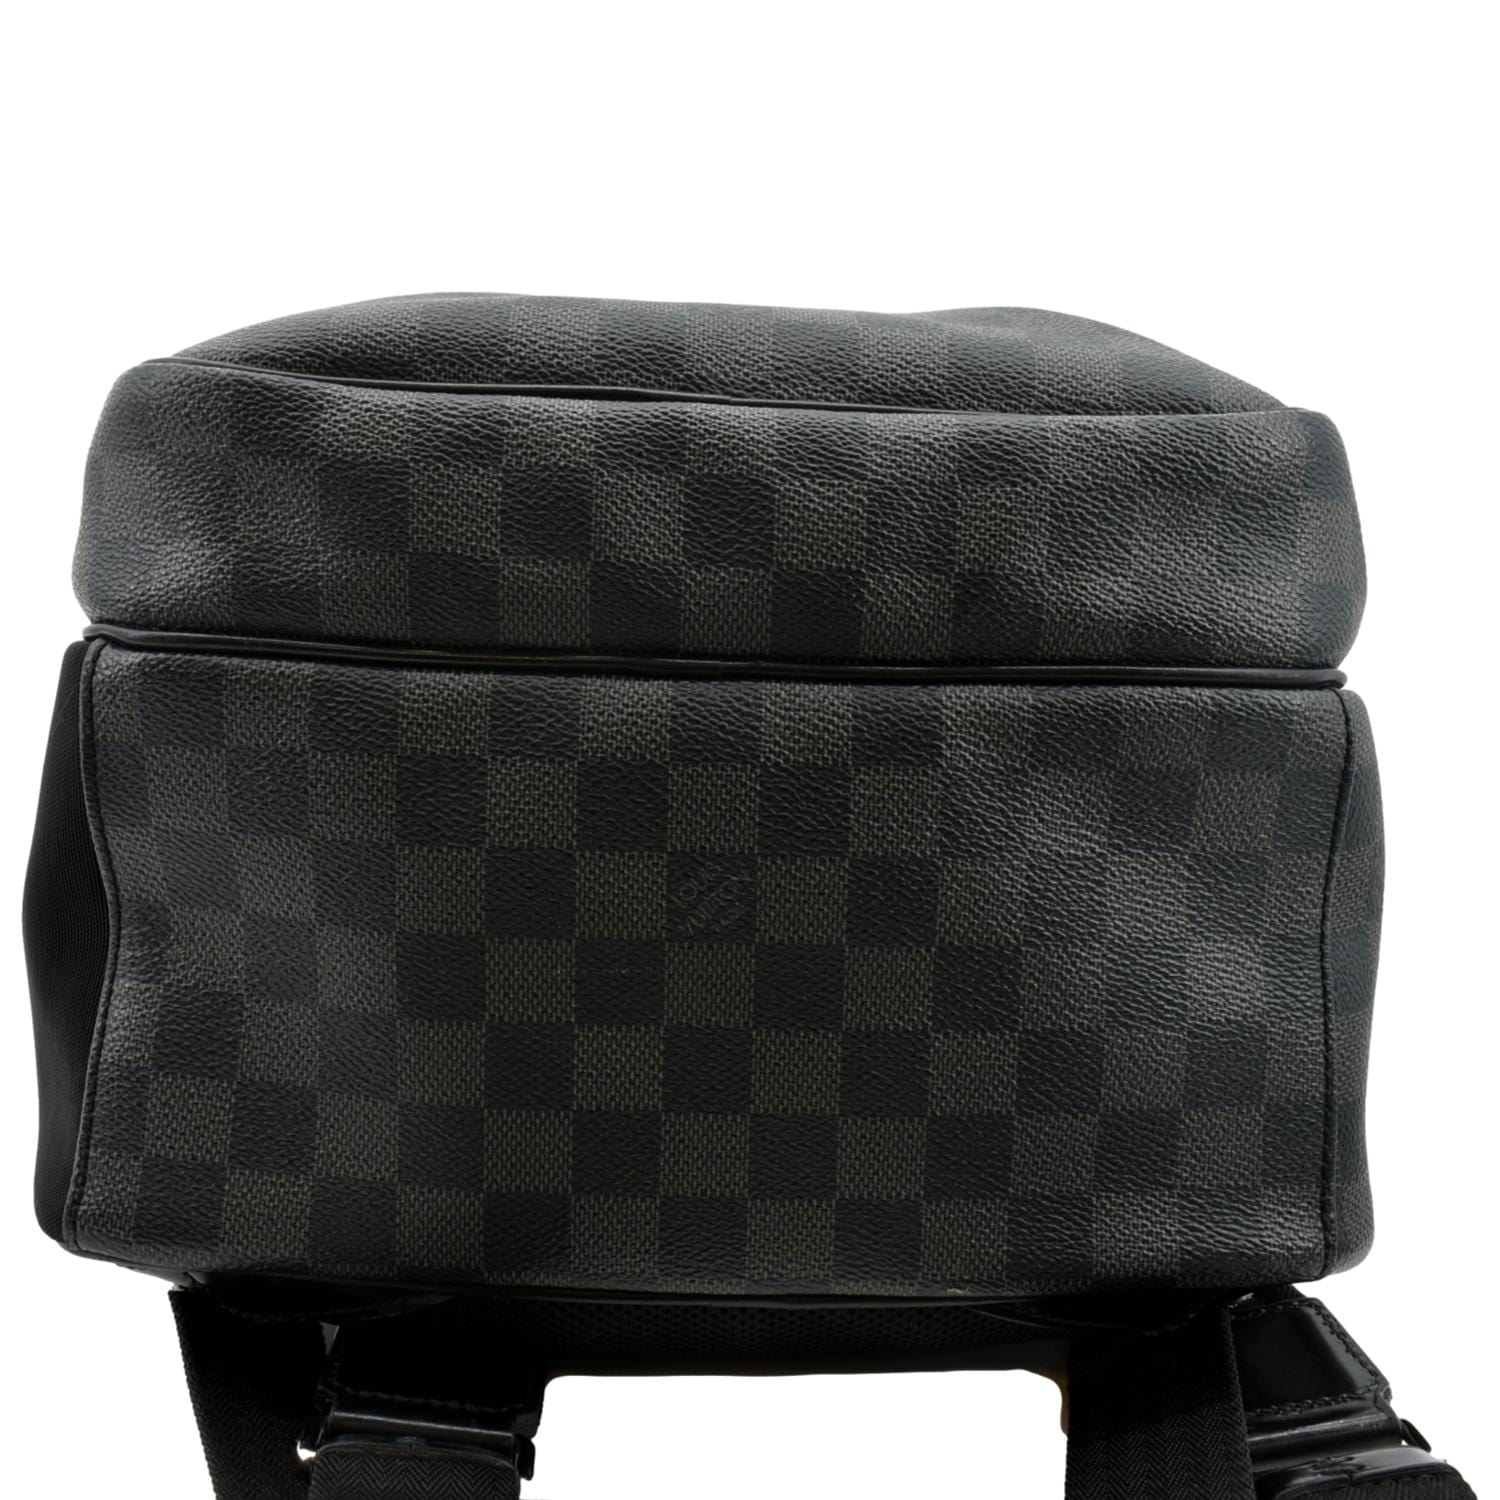 Michael backpack cloth bag Louis Vuitton Black in Cloth - 26184151